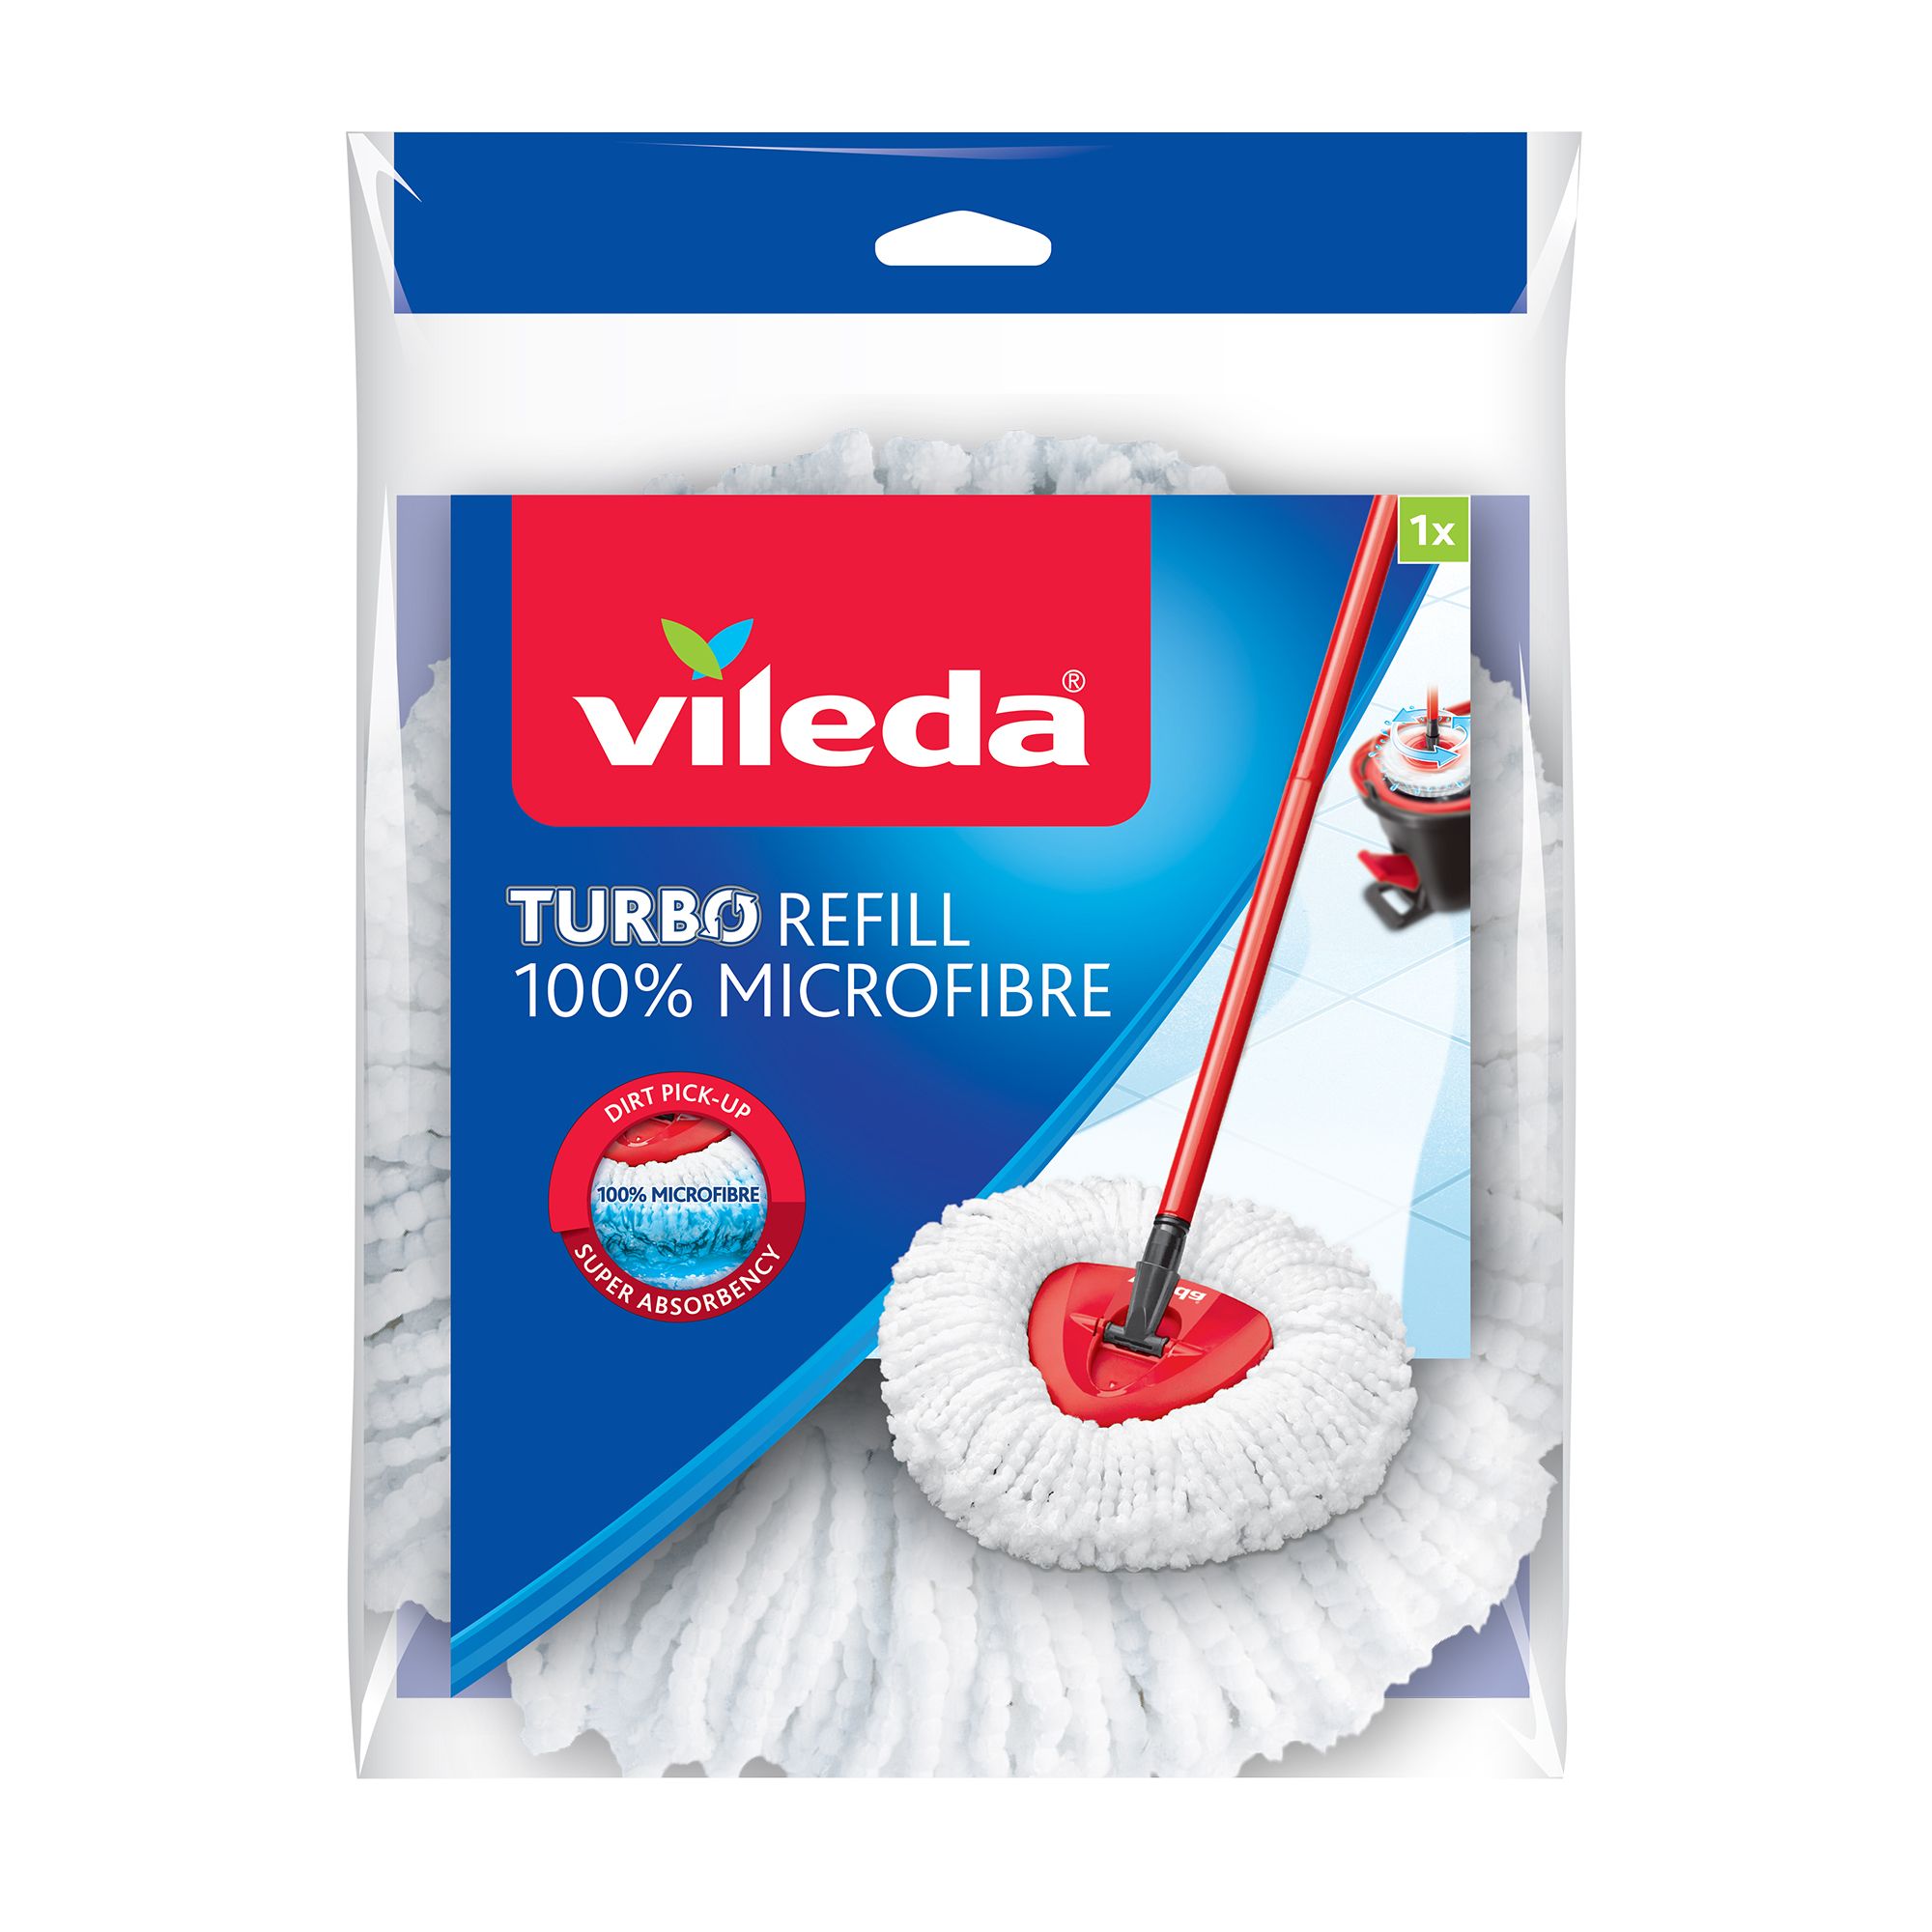 Vileda Turbo 2-in-1 Microfibre Mop Refill Head, 16.5 x 30 x 22 cm, Red